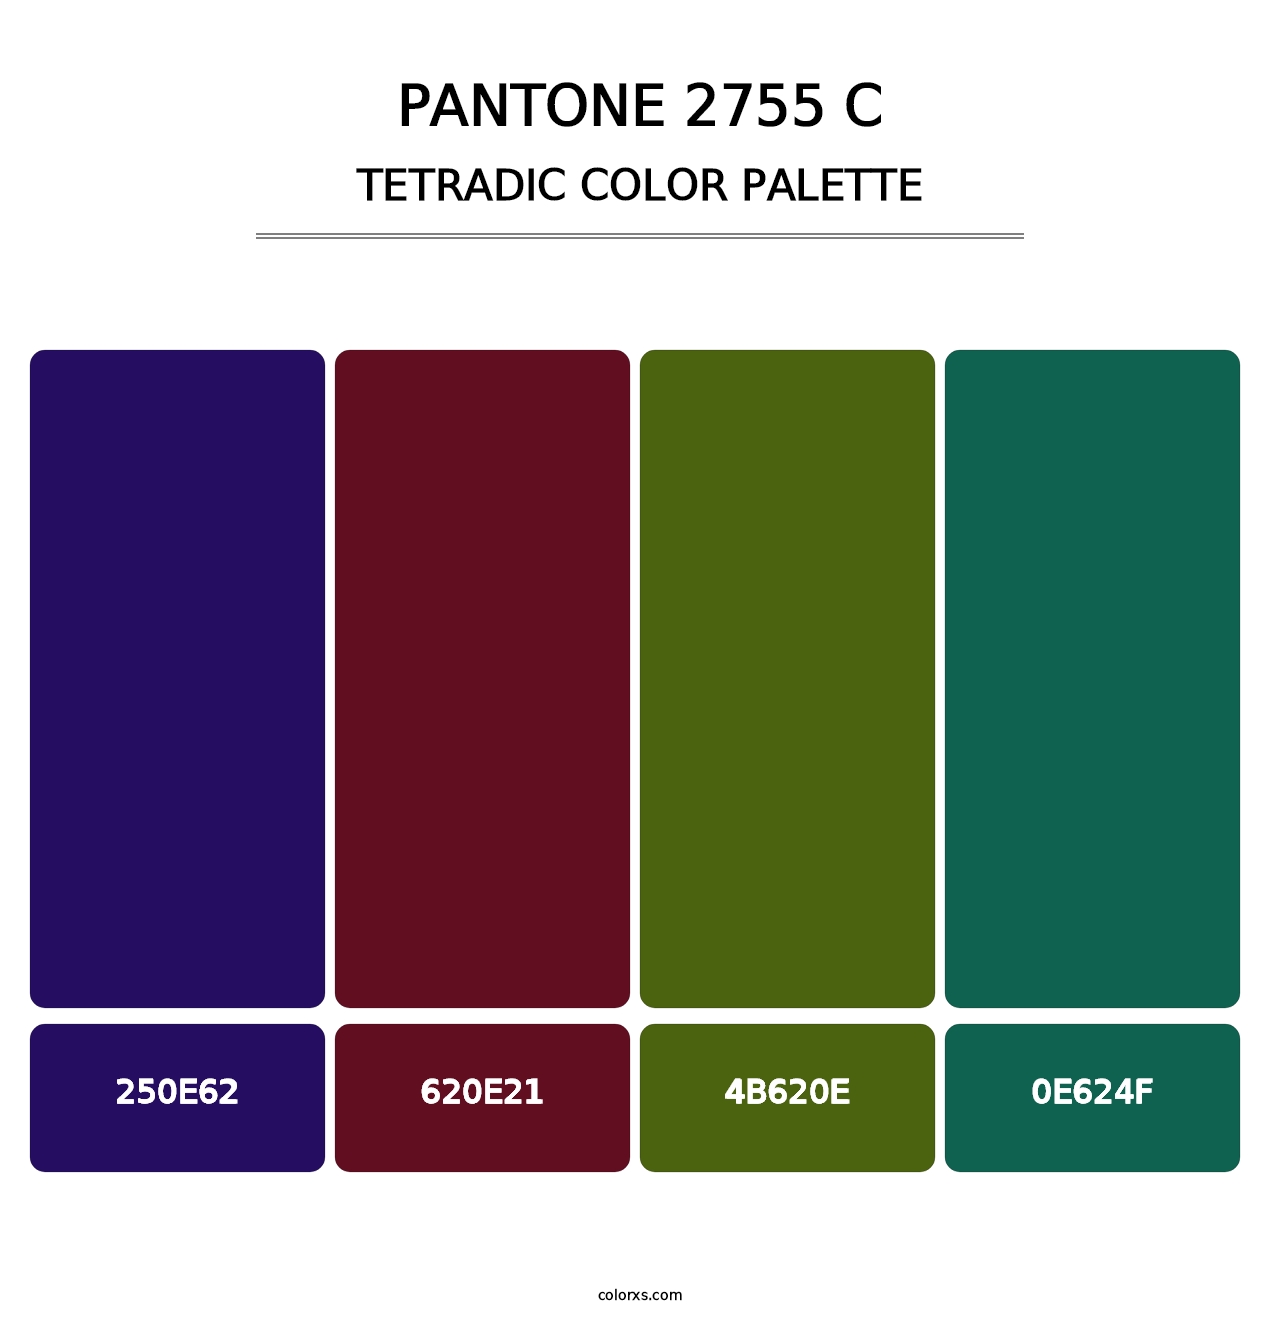 PANTONE 2755 C - Tetradic Color Palette